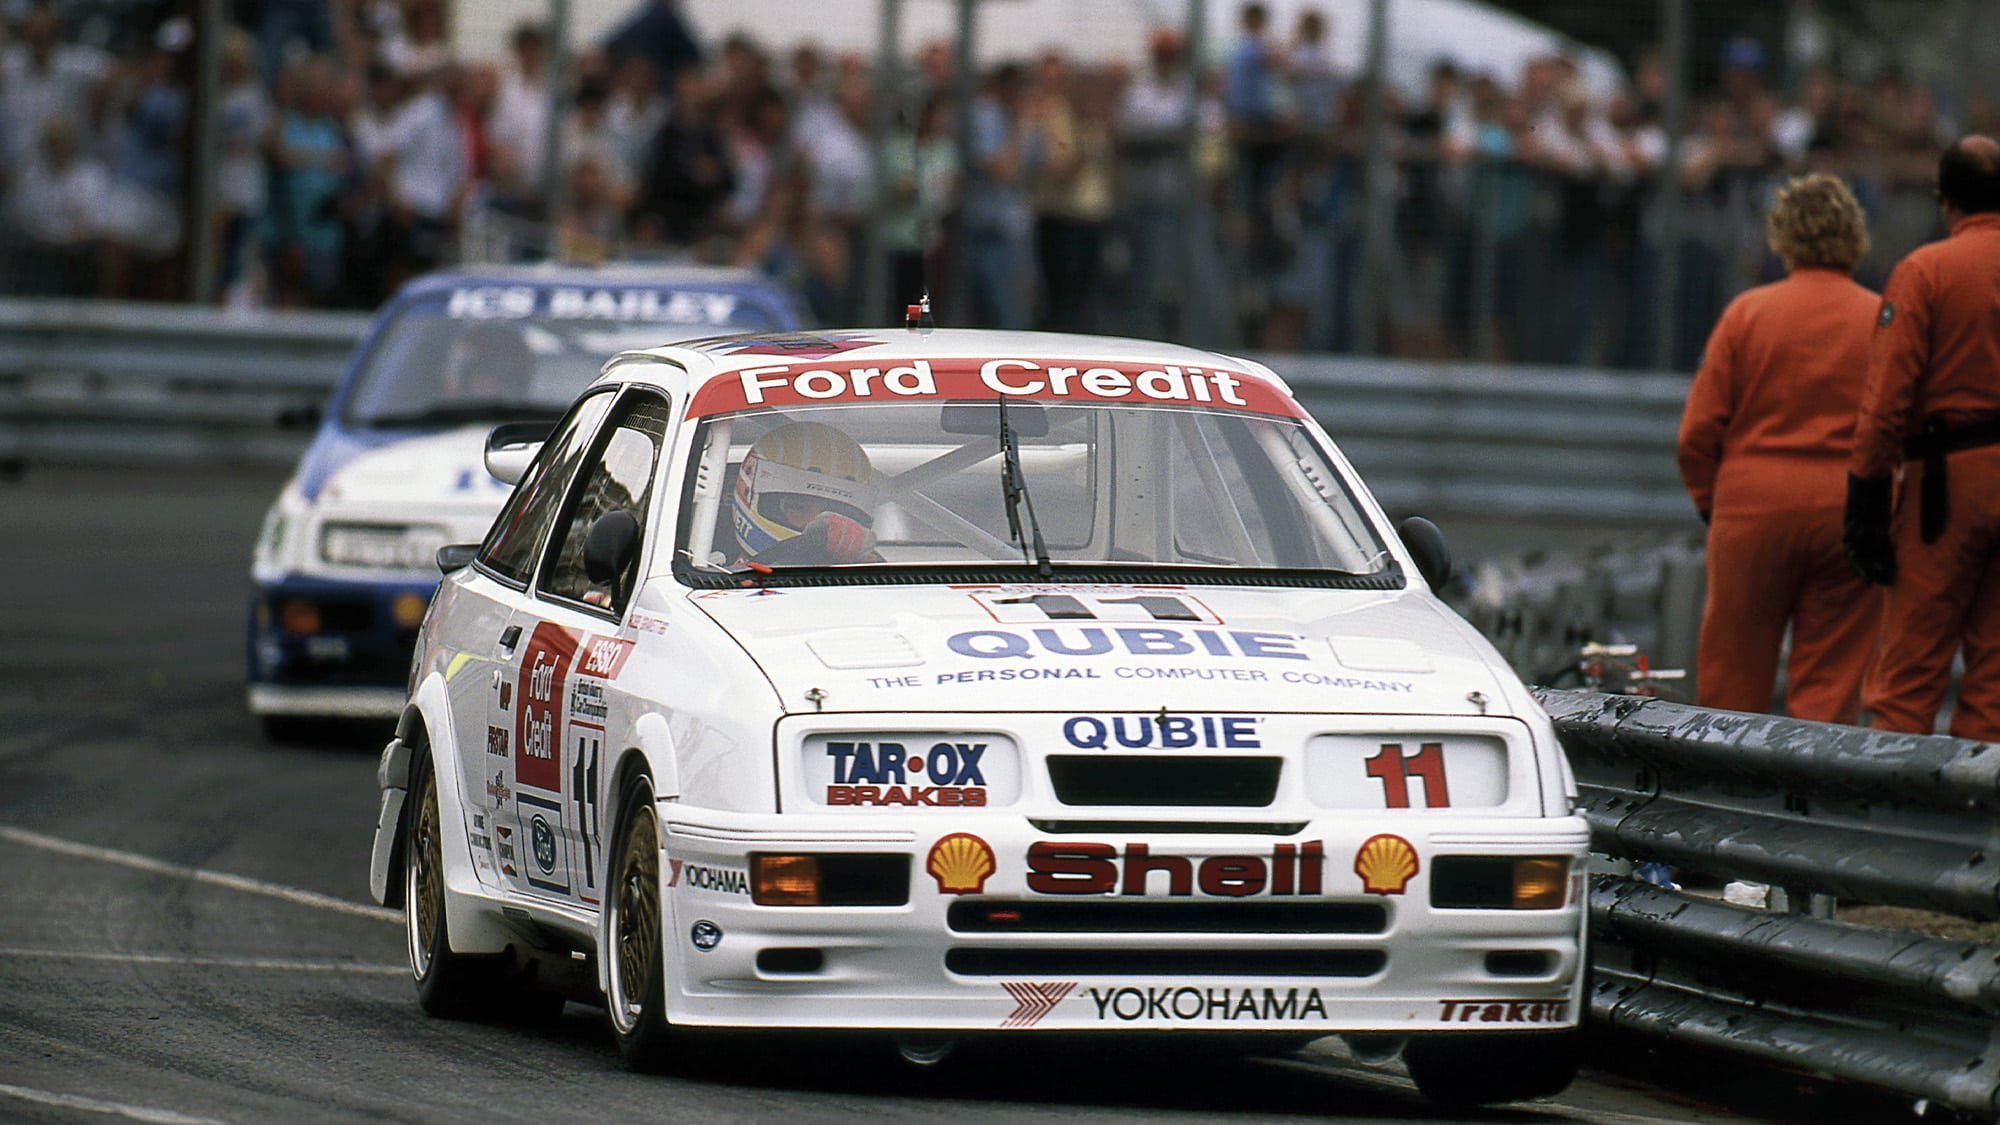 Rob-Gravett-in-hos-Trakstar-Cosworth-RS500-leading-Andy-Rouse-in-the-1990-Birmingham-Superprix.jpg